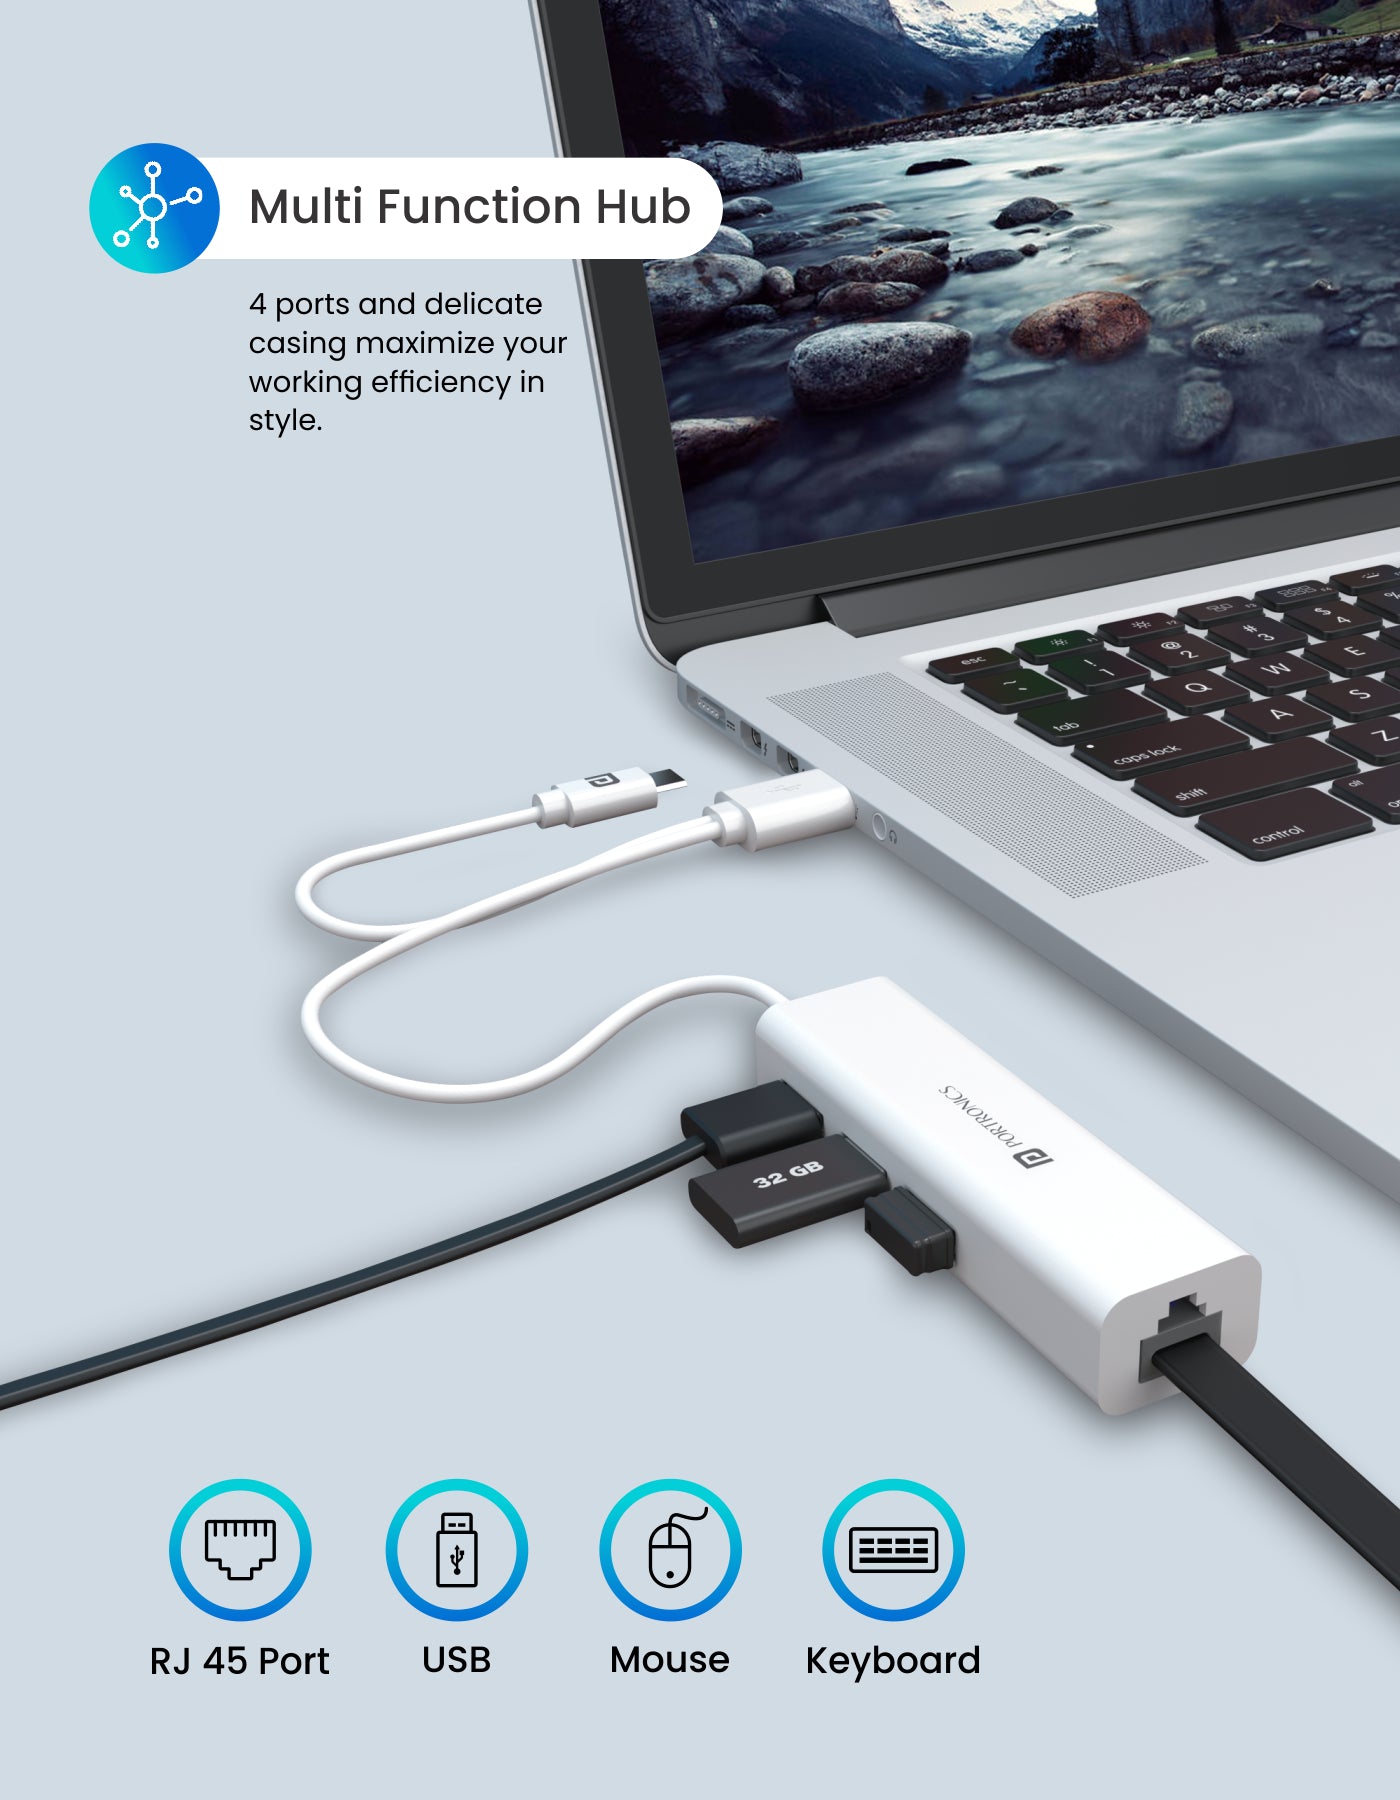 Buy Portronics Mport 30 2-in-1 Port Hub SD Card Reader/data transfer